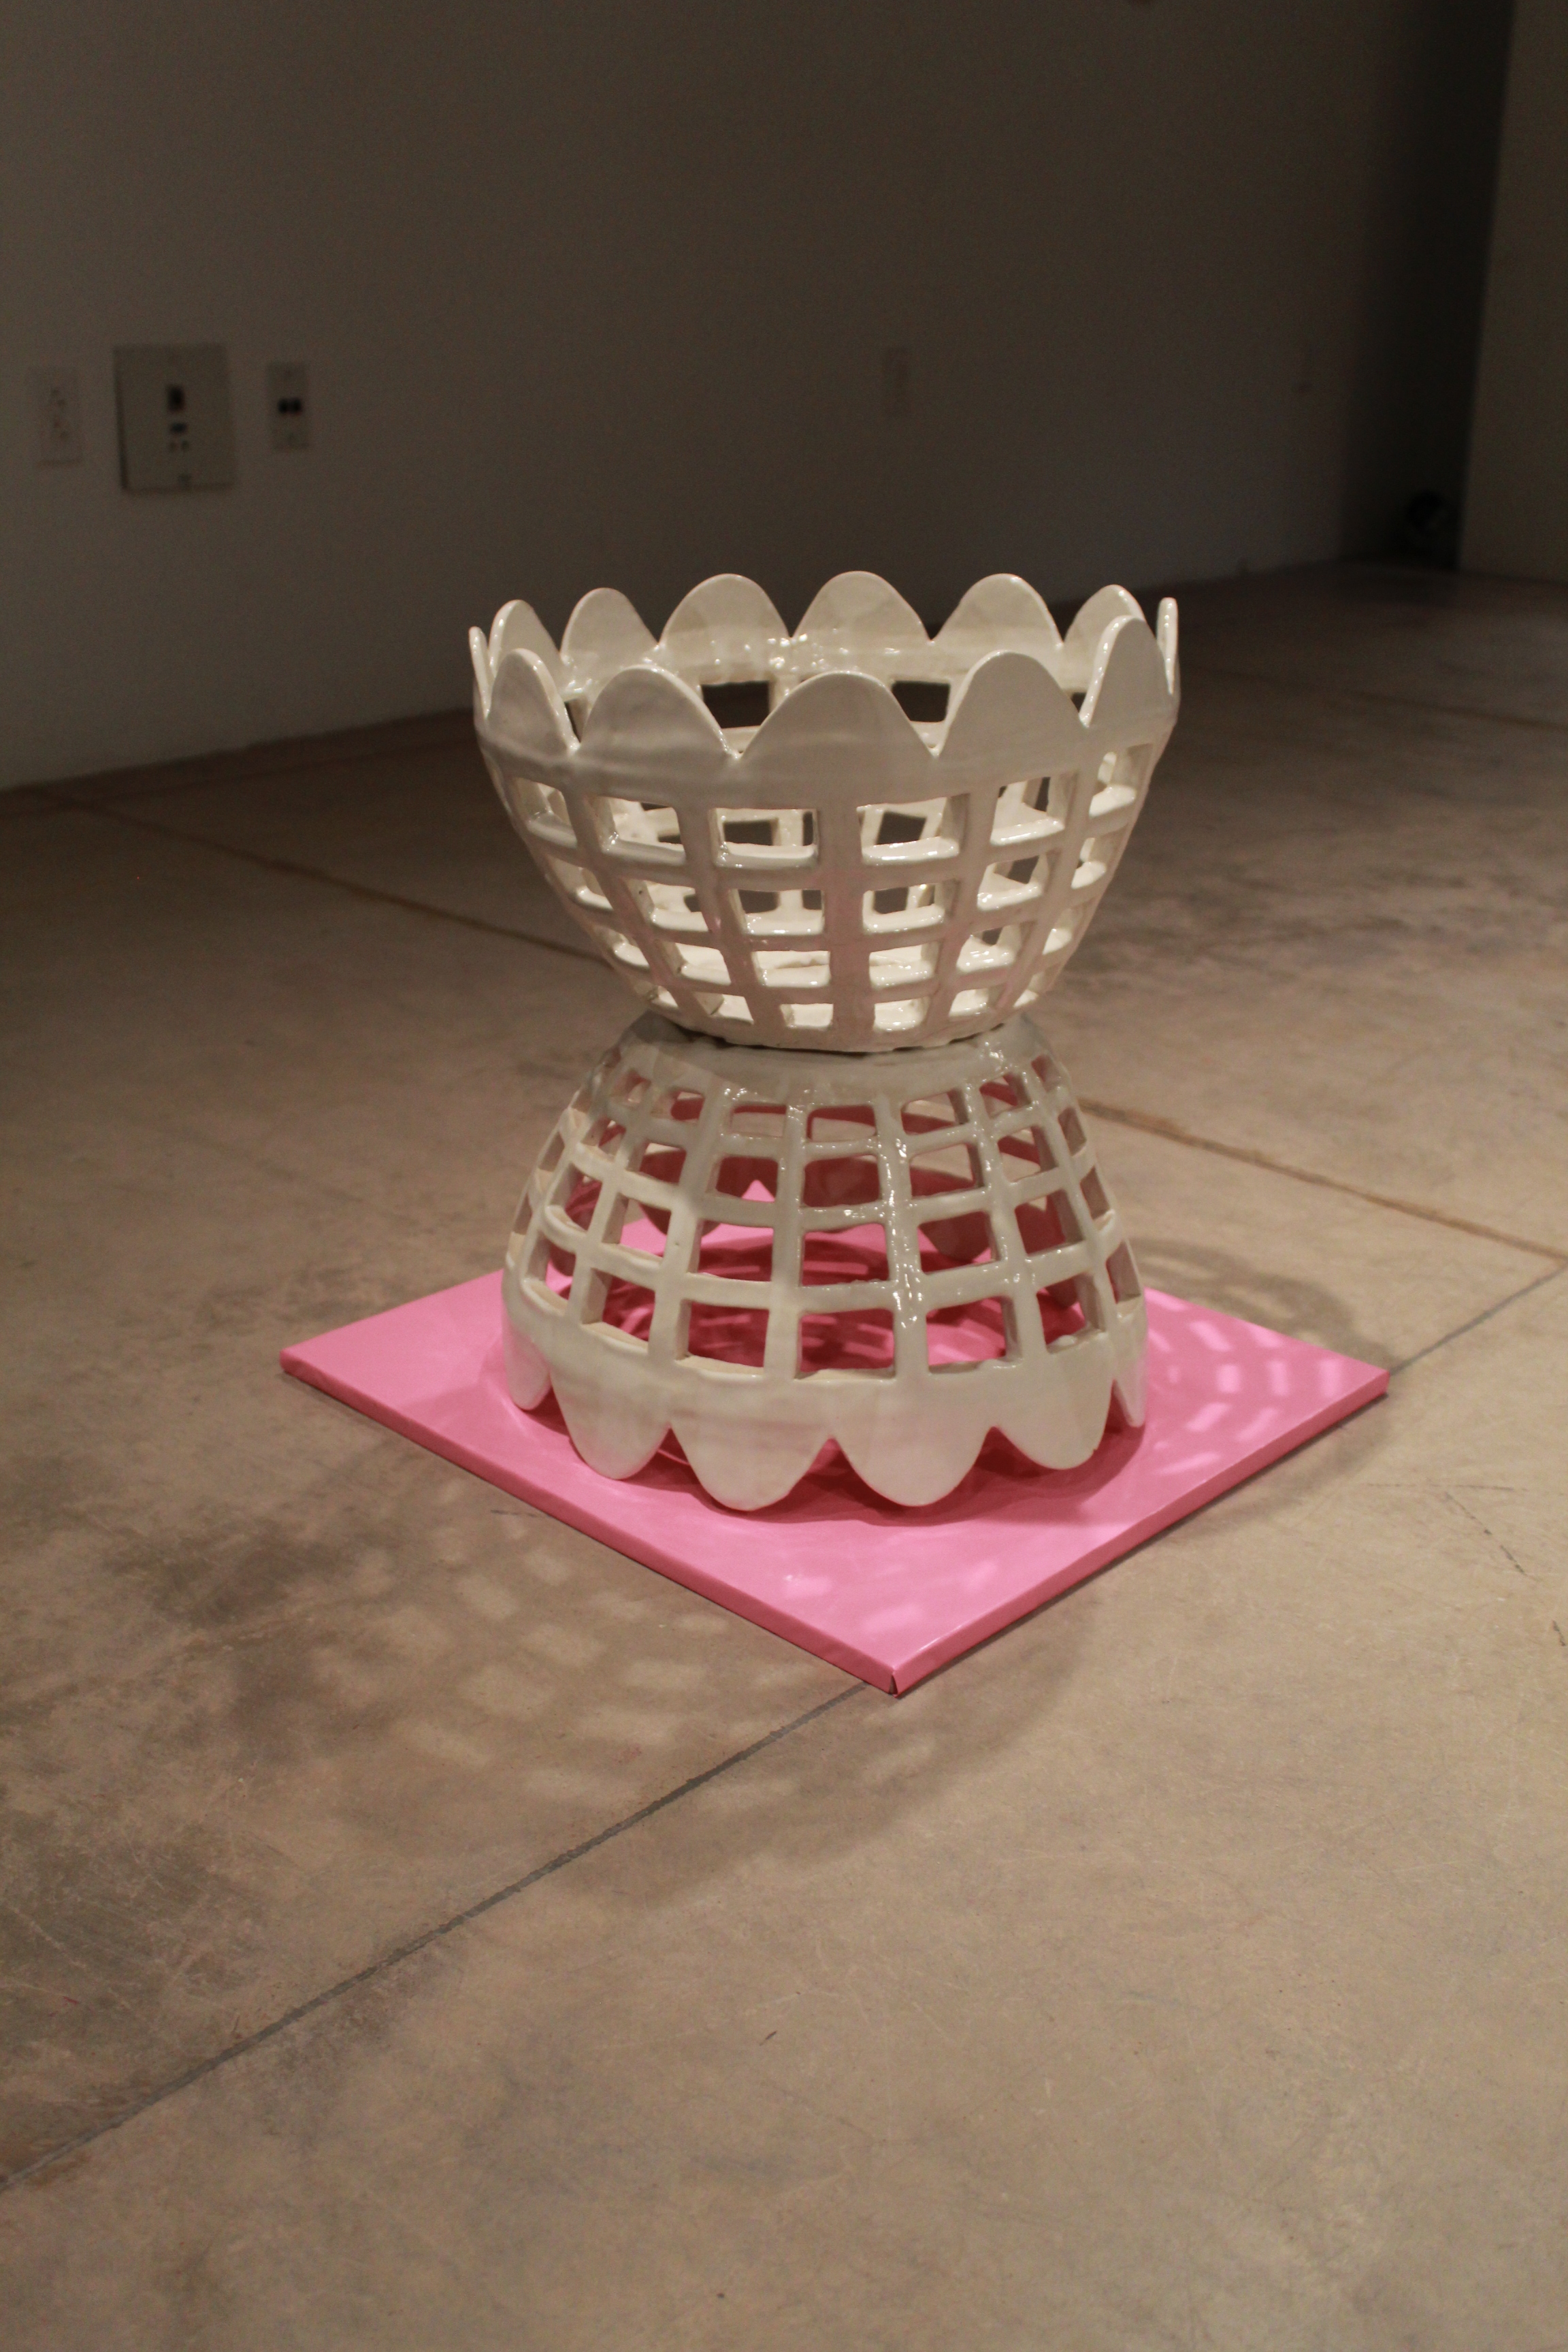 Fruit Basket as sculpture